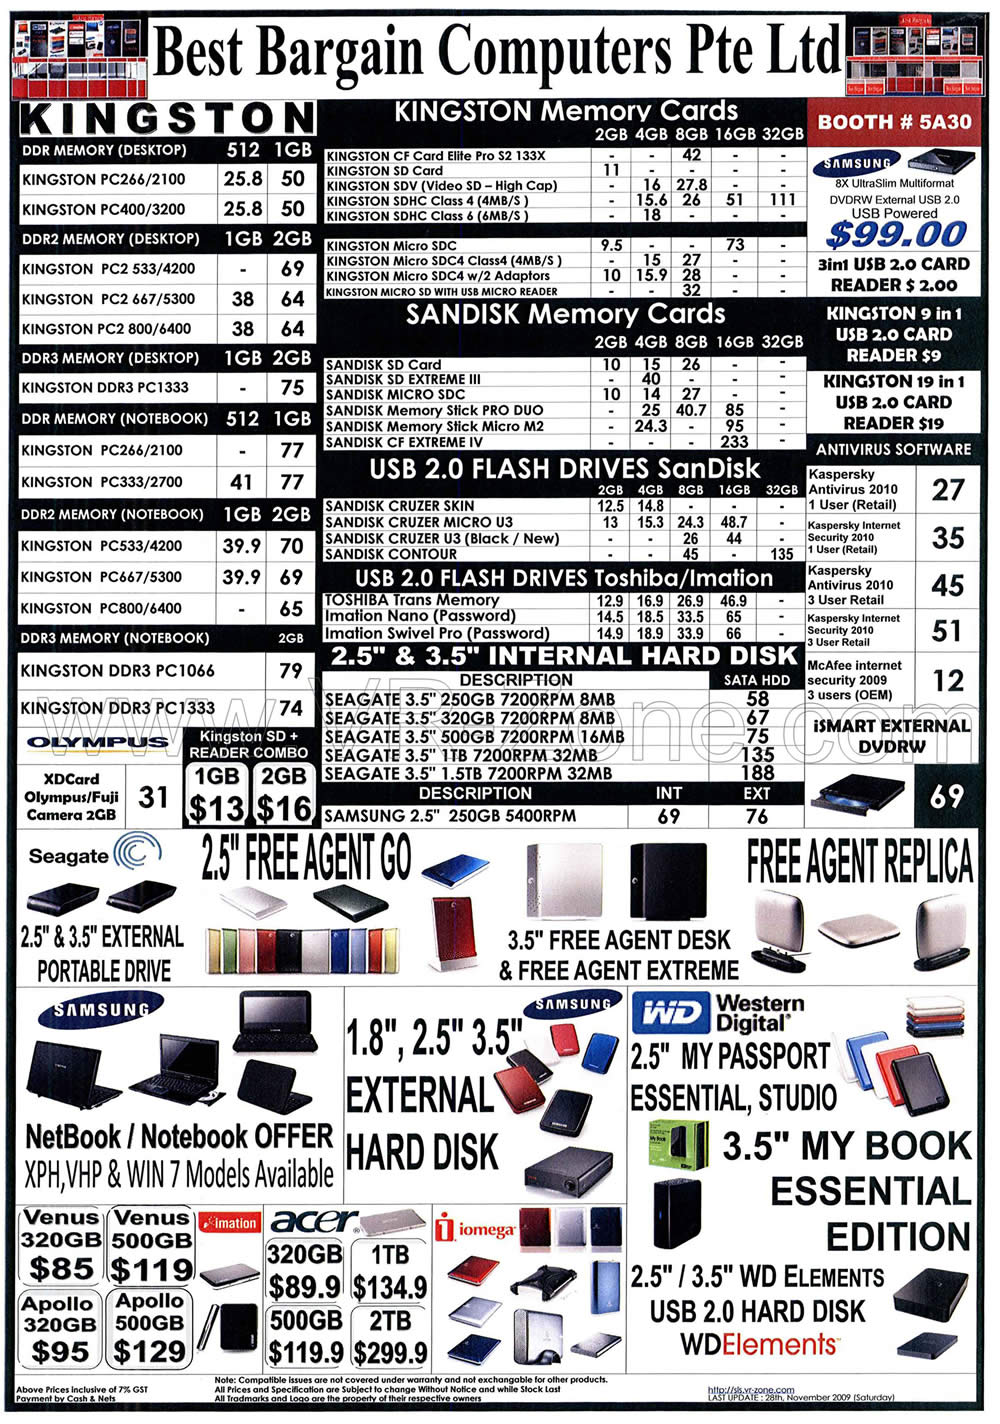 Sitex 2009 price list image brochure of Best Bargain Memory Kingston Sandisk Hard Disk Flash Drives External Storage